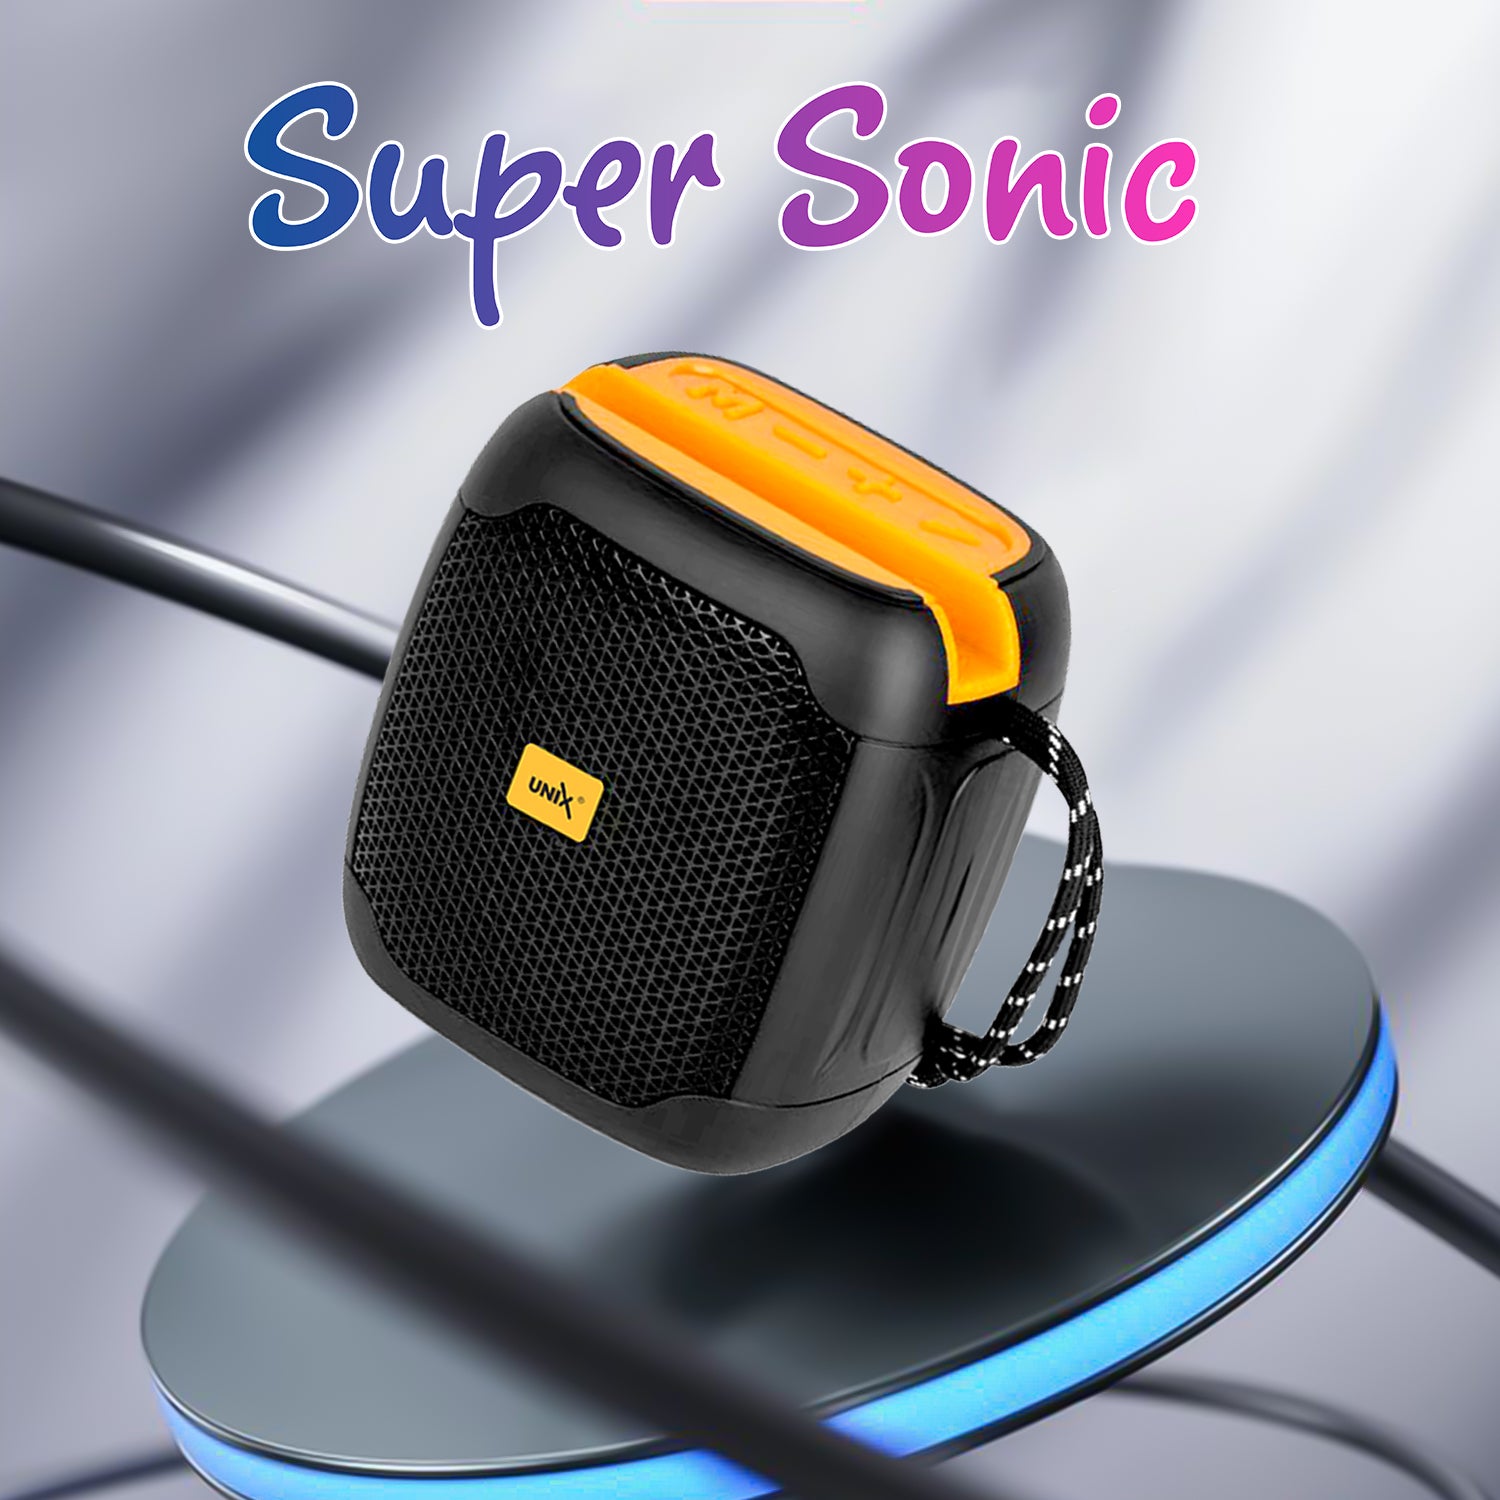 Unix UX-888 Super Sonic Wireless Speaker - Super Bass Black all